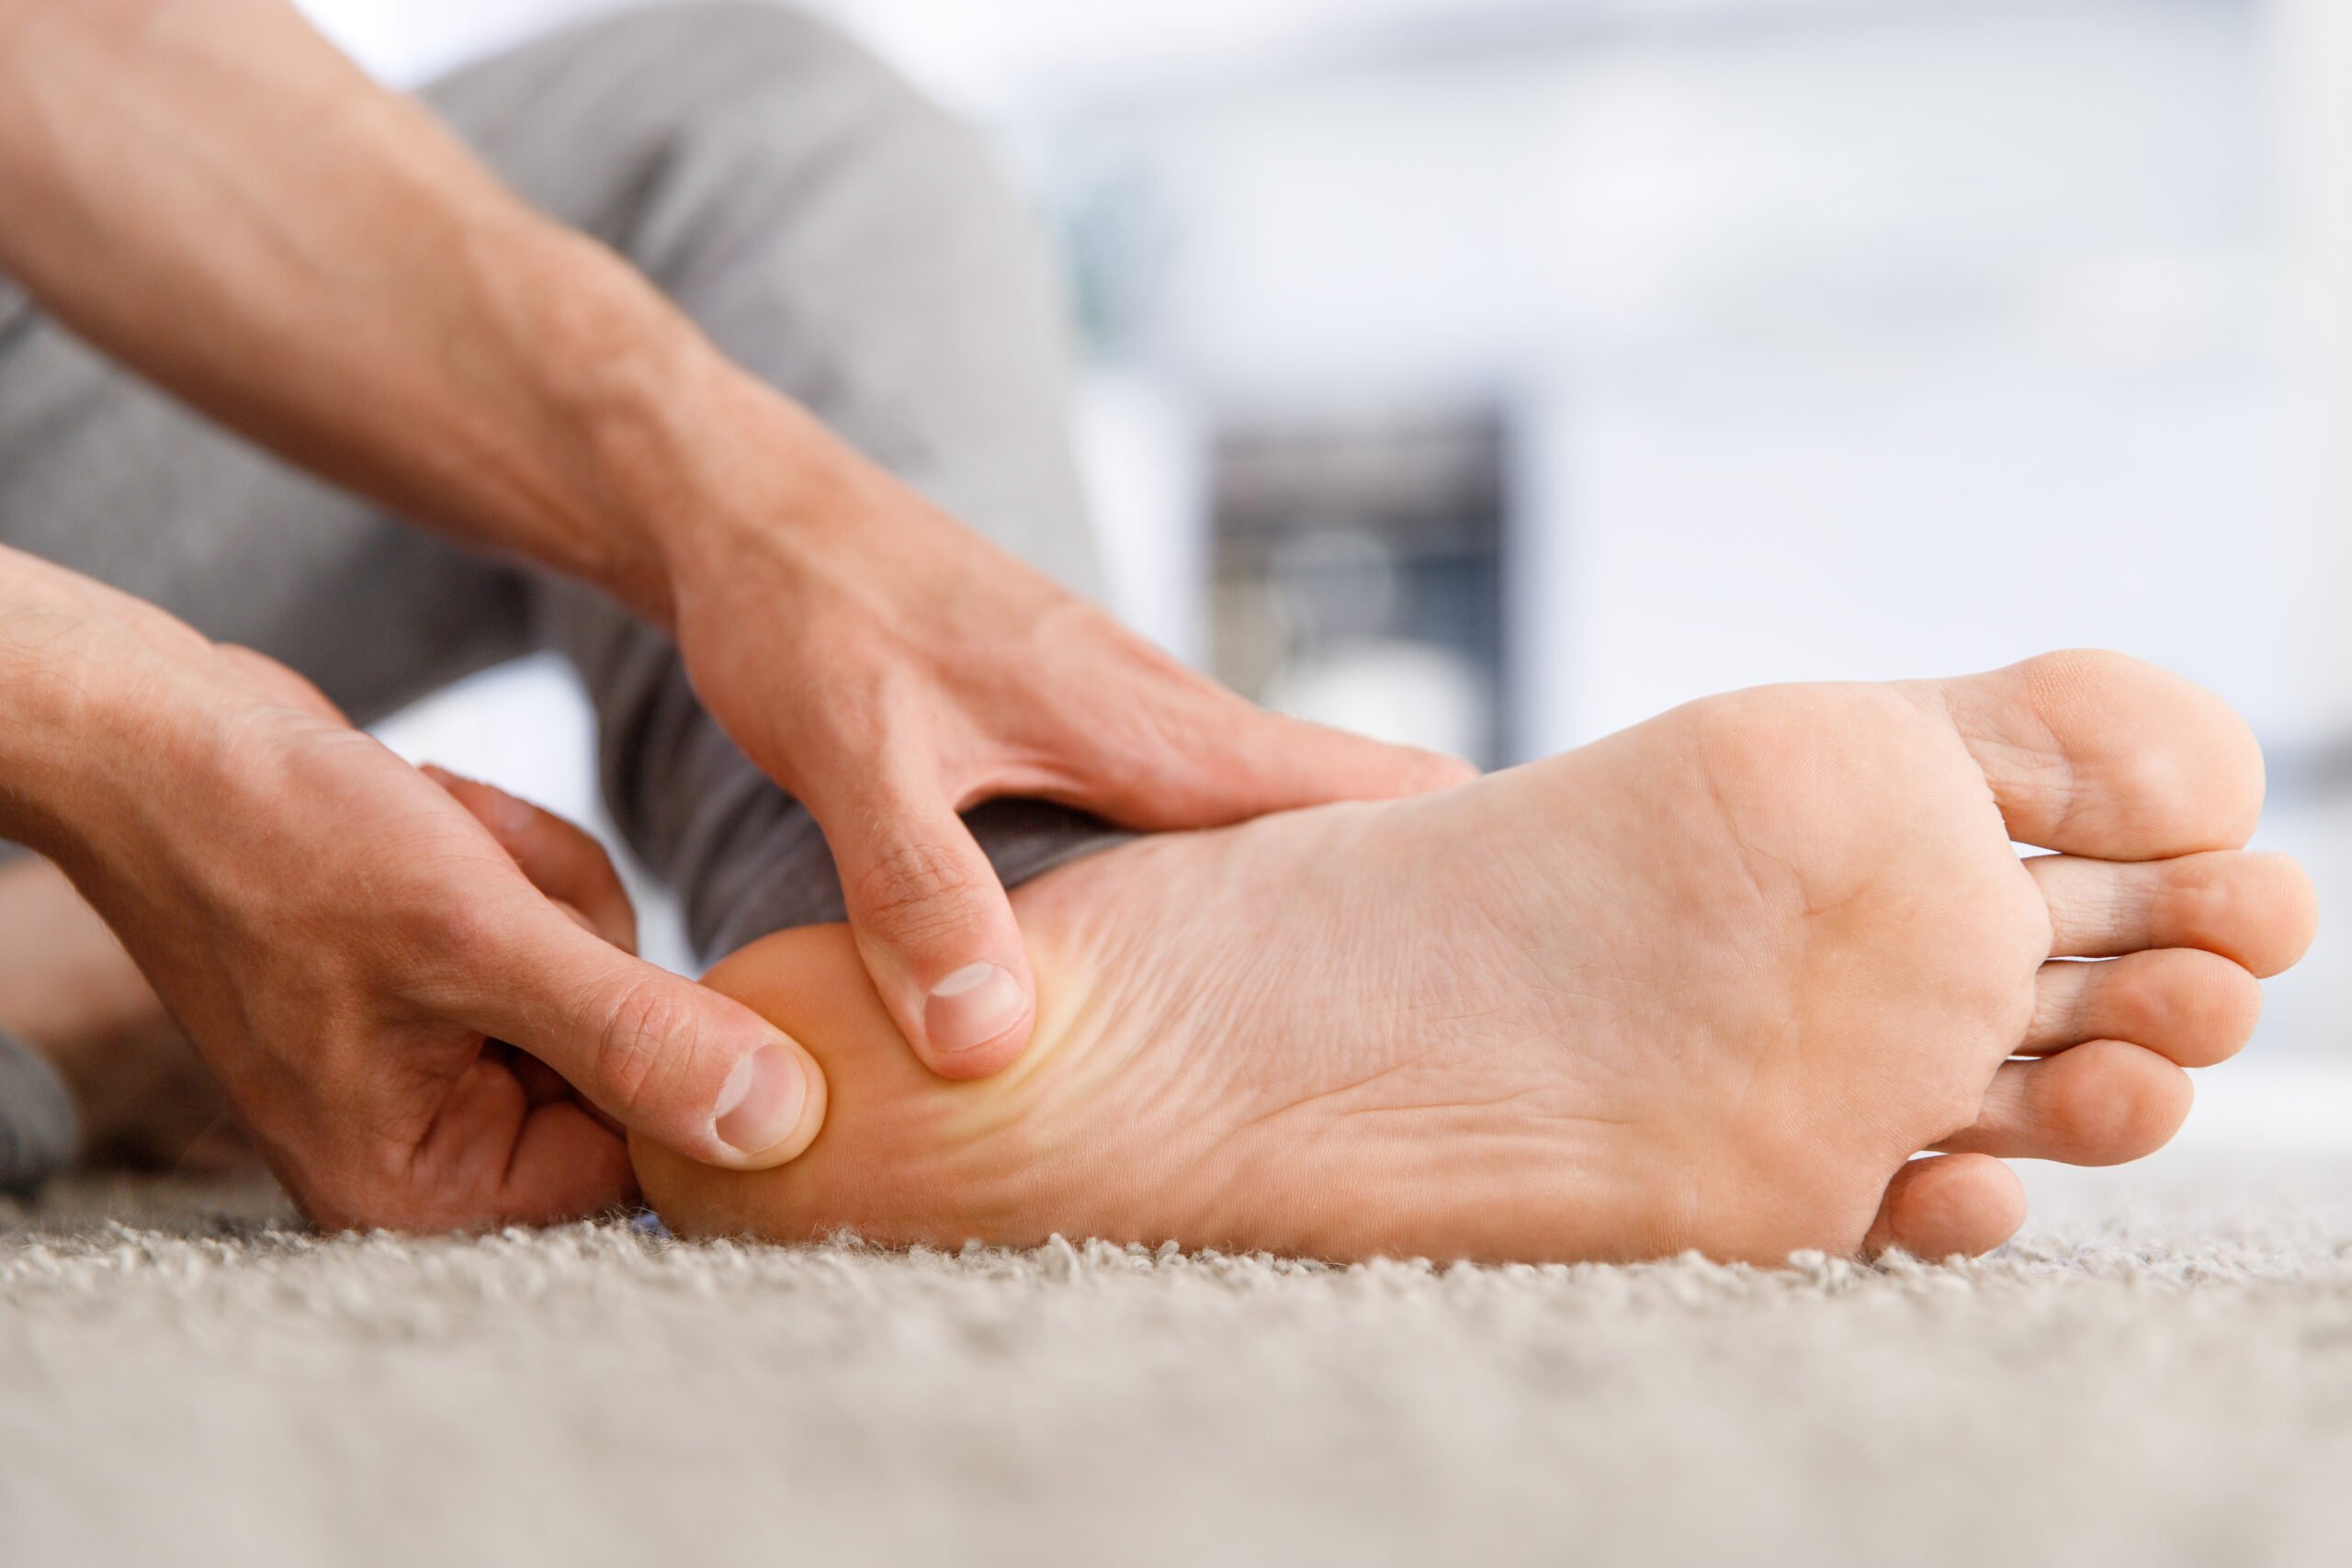 Diabetic Foot: Symptoms, Causes & Treatment - ePodiatrists